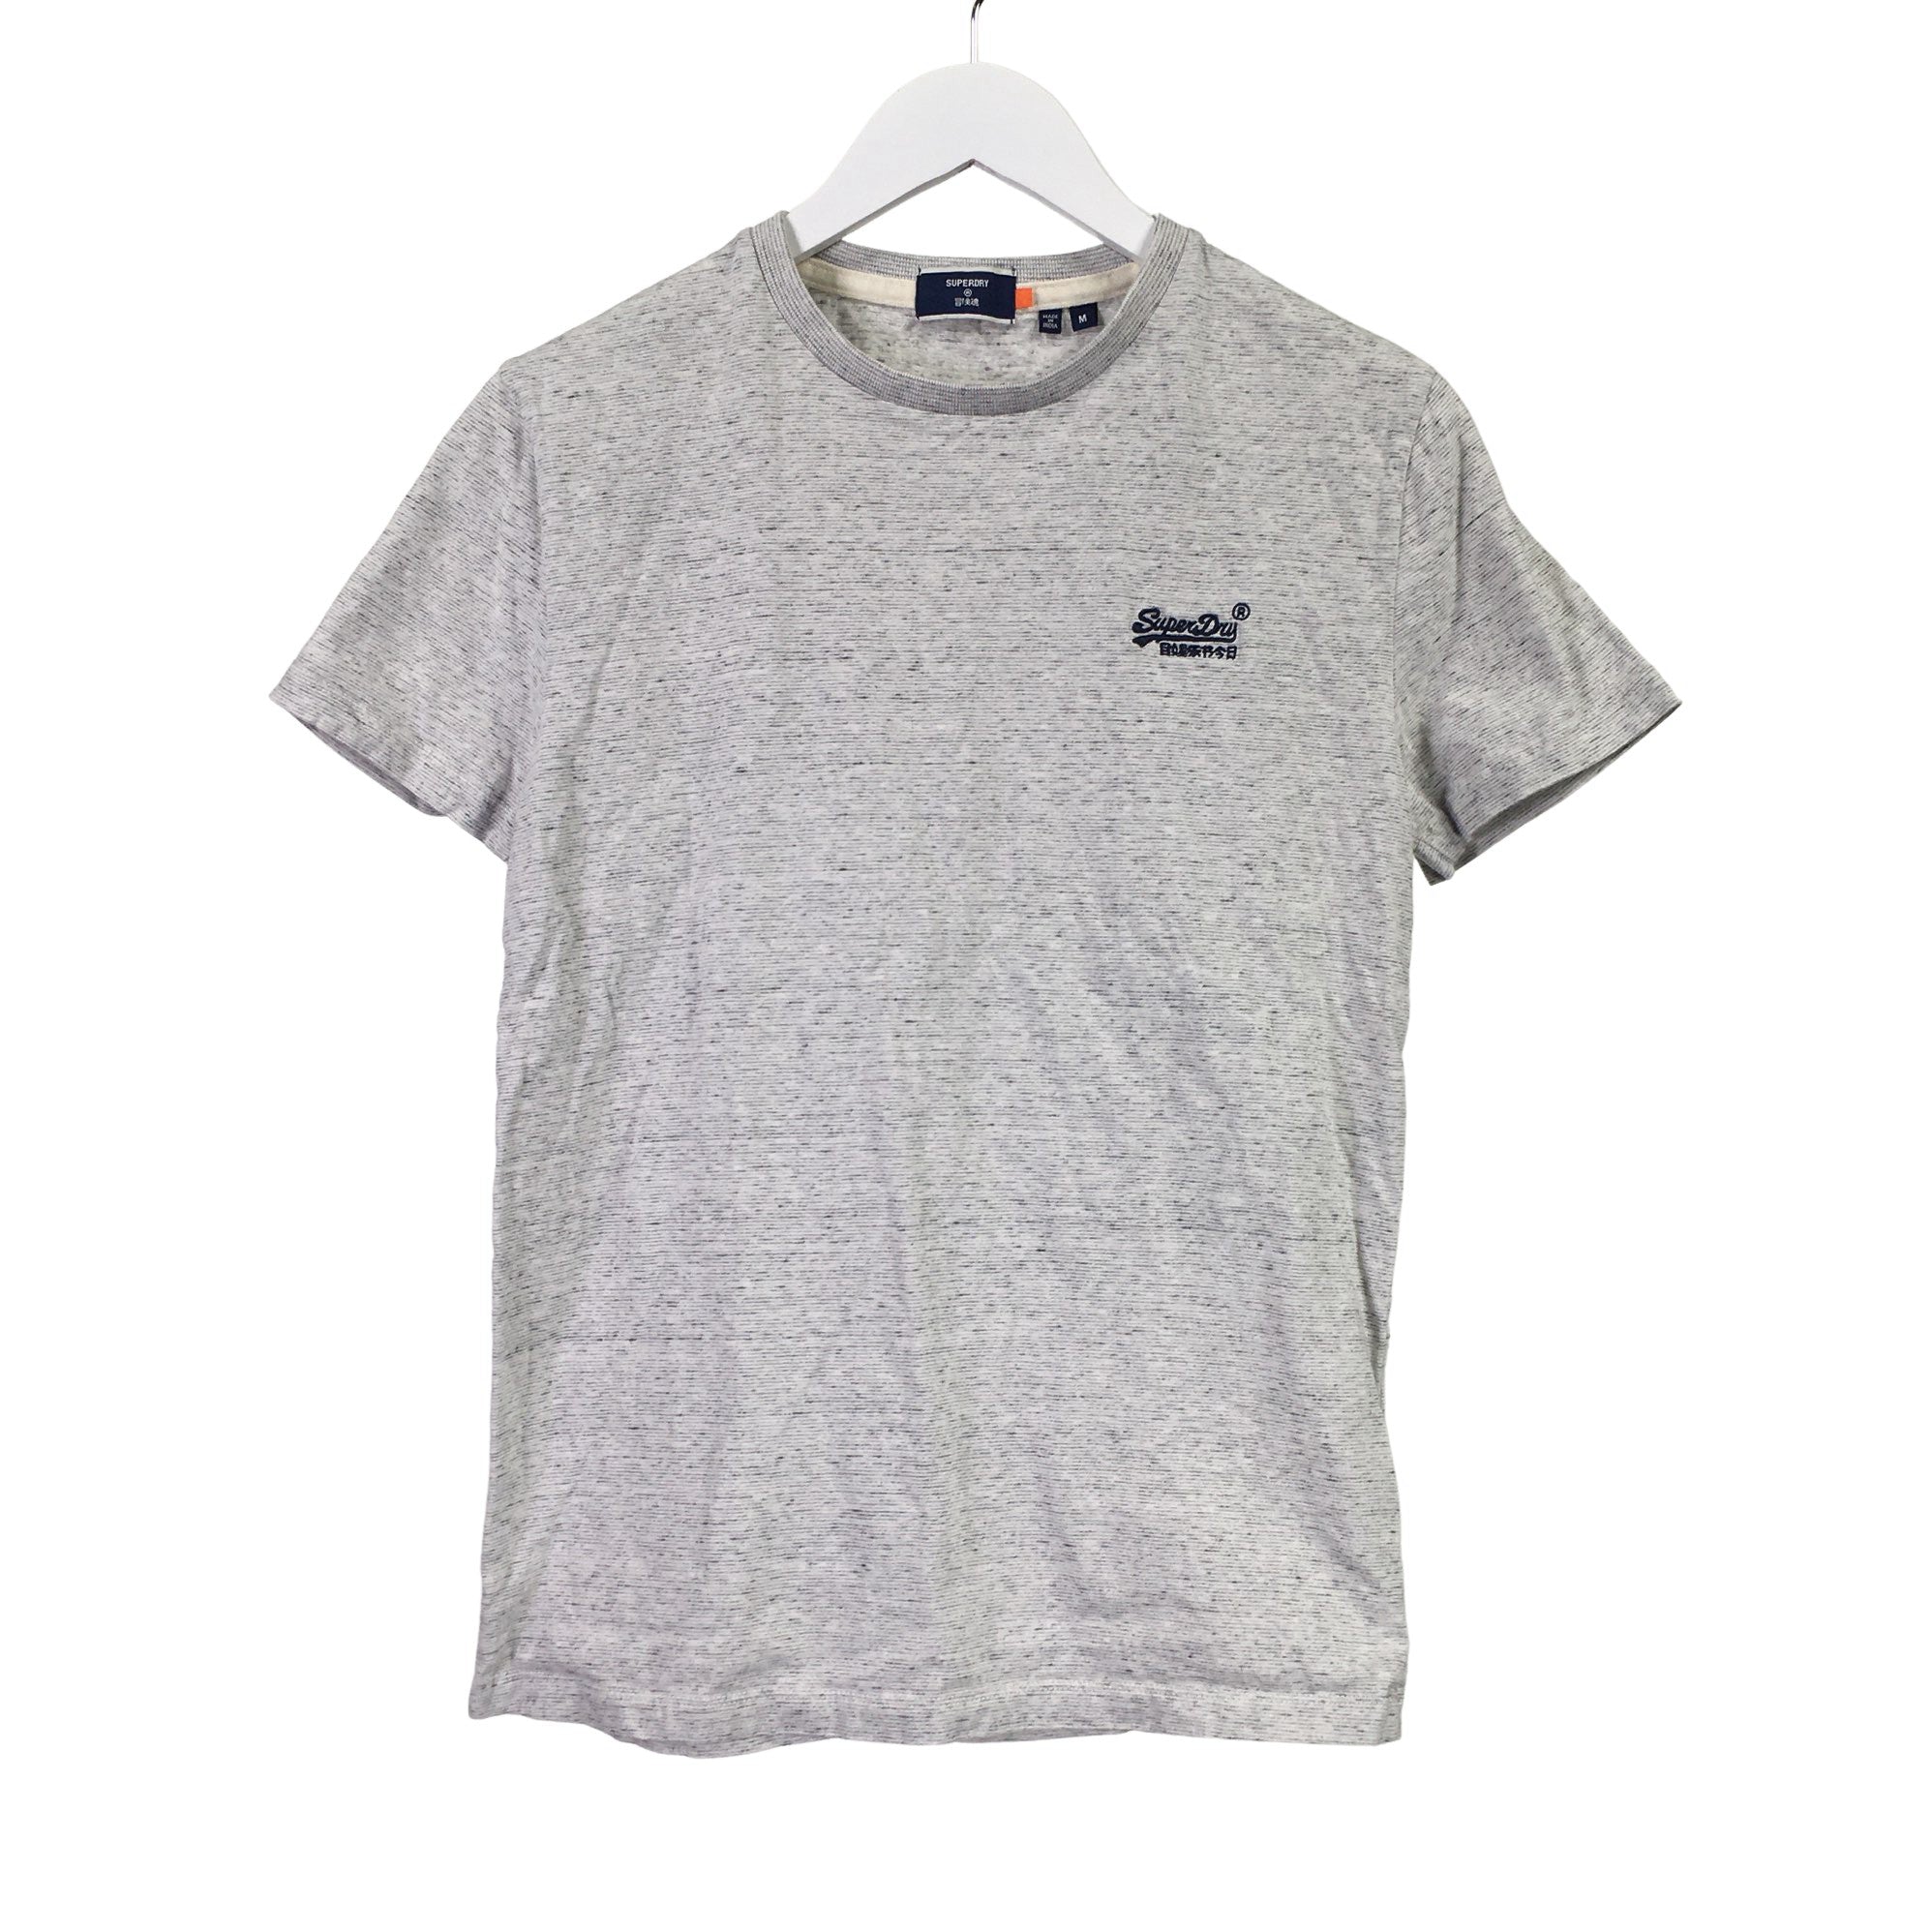 Men's Even&Odd T-shirt, size M (Grey)